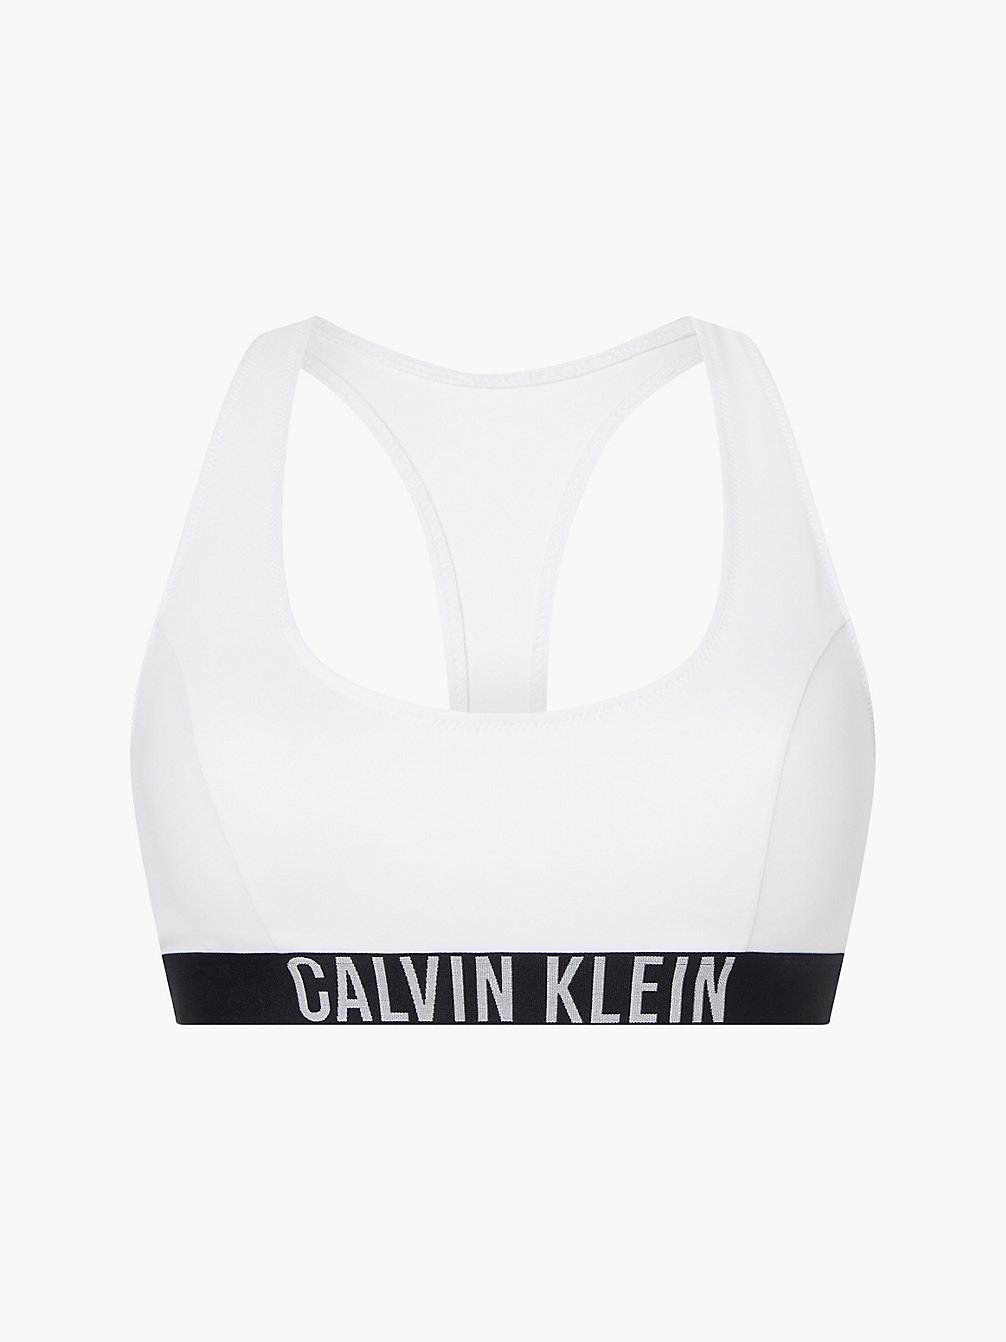 Top Bikini A Reggiseno - Intense Power > PVH CLASSIC WHITE > undefined donna > Calvin Klein